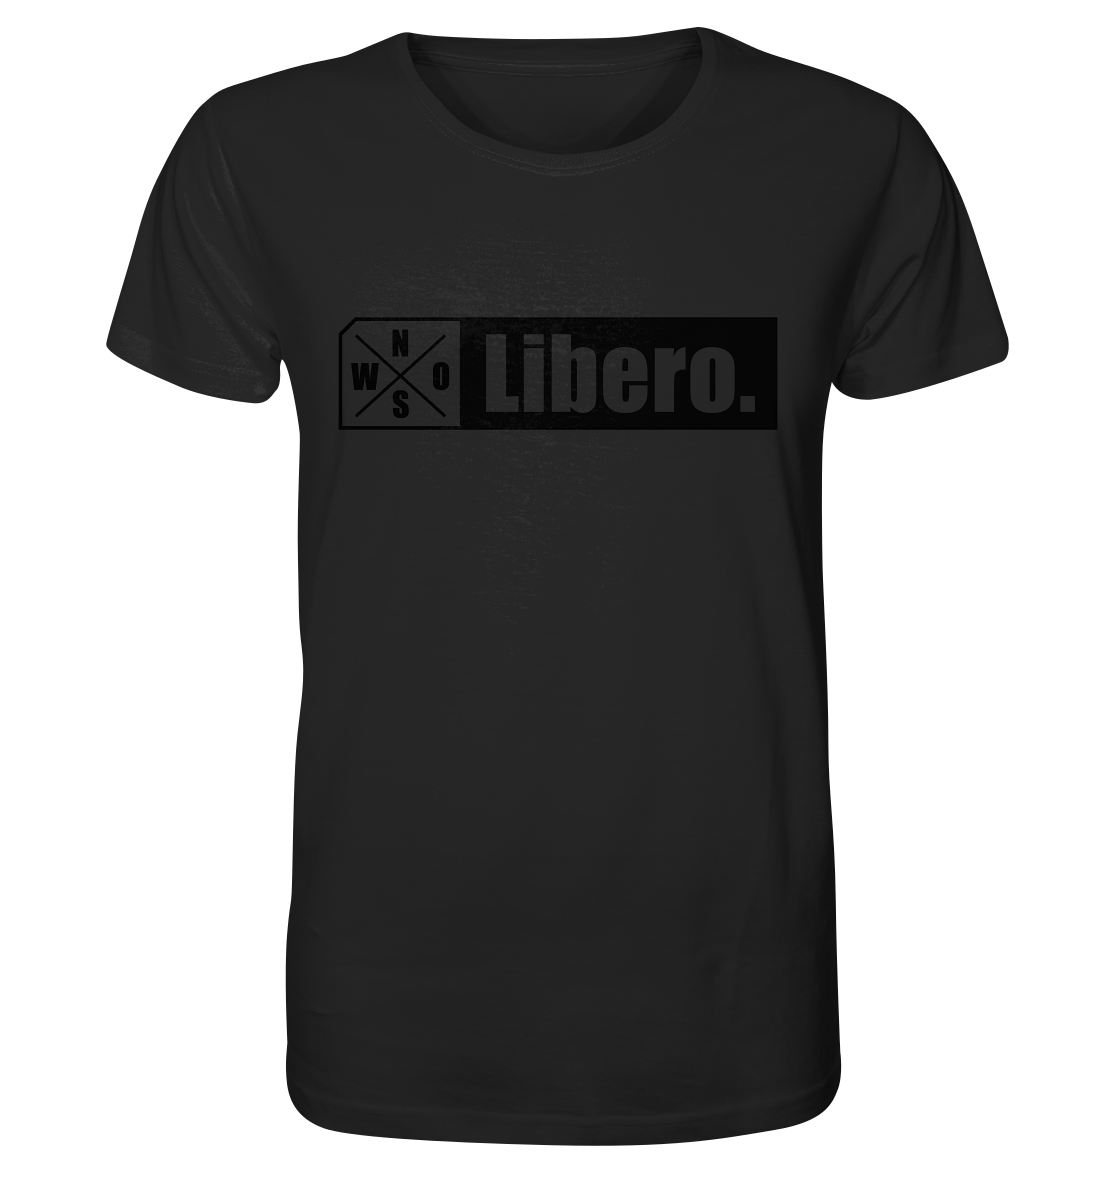 N.O.S.W. BLOCK Teamsport Shirt "Libero." Männer Organic T-Shirt schwarz